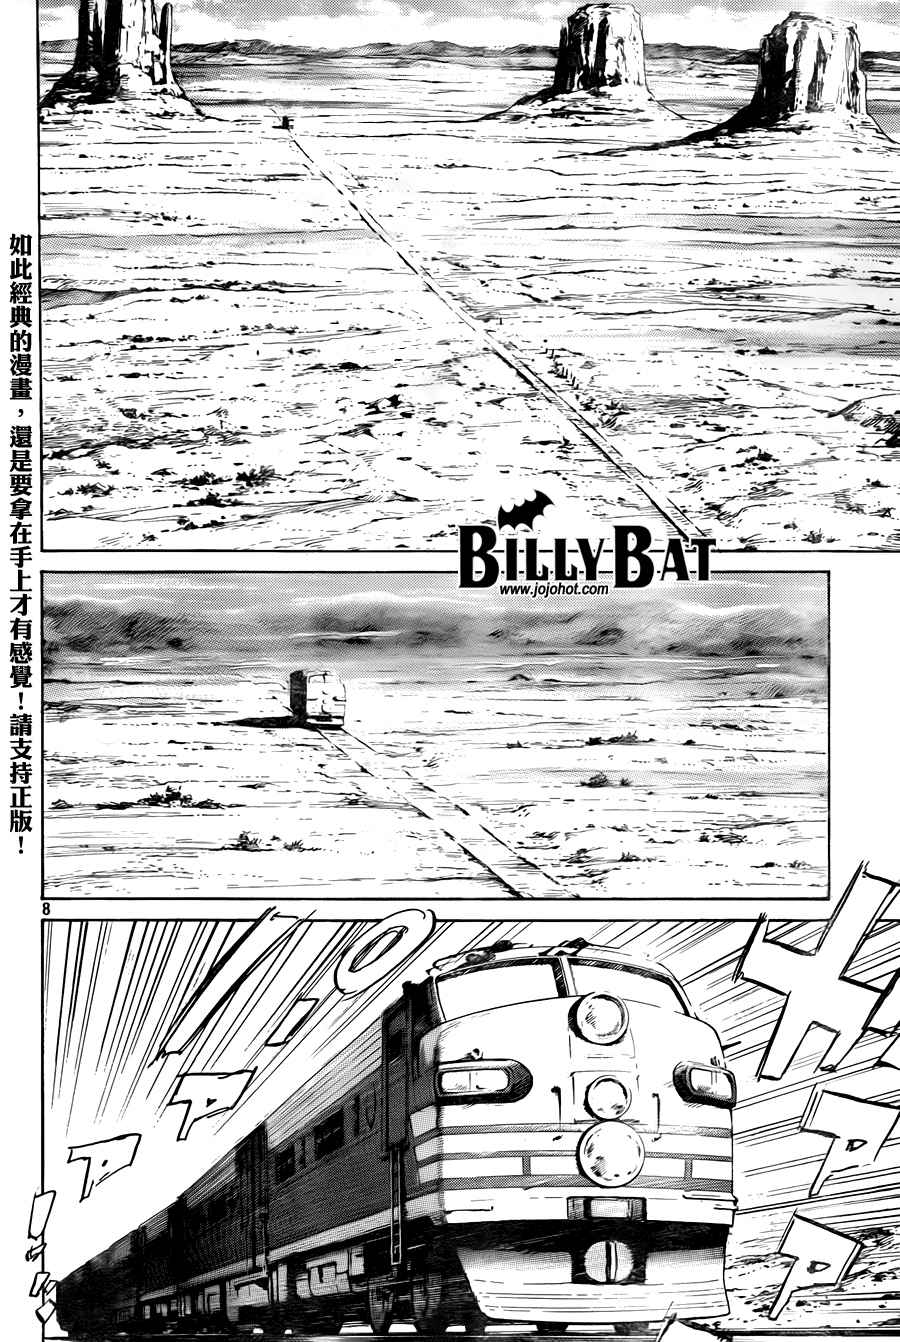 Billy_Bat - 第4卷(3/5) - 4